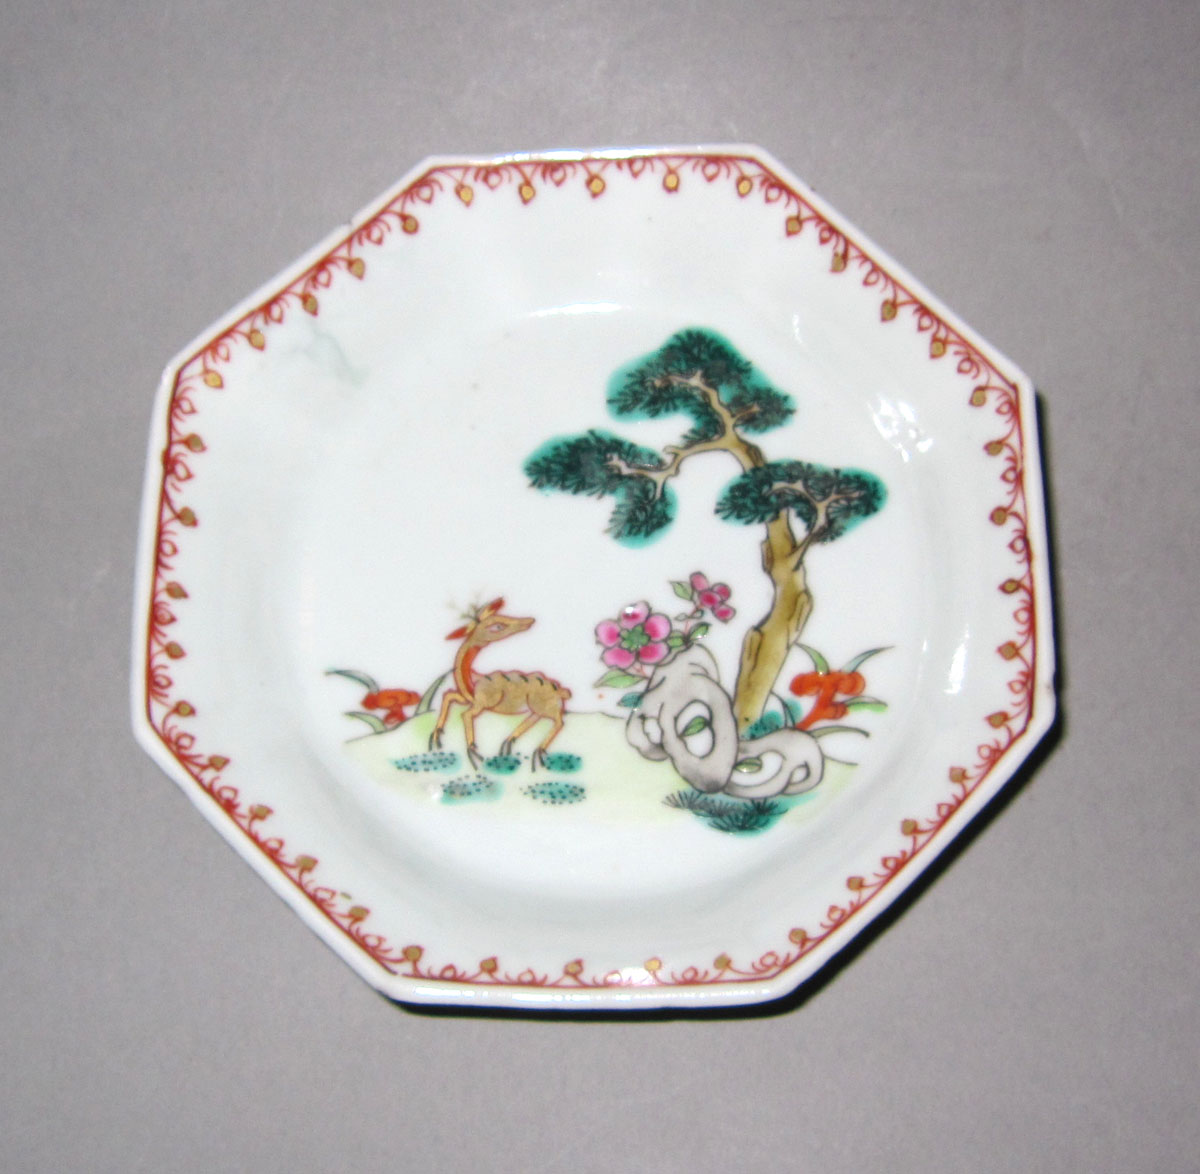 1953.0156.002B Porcelain saucer